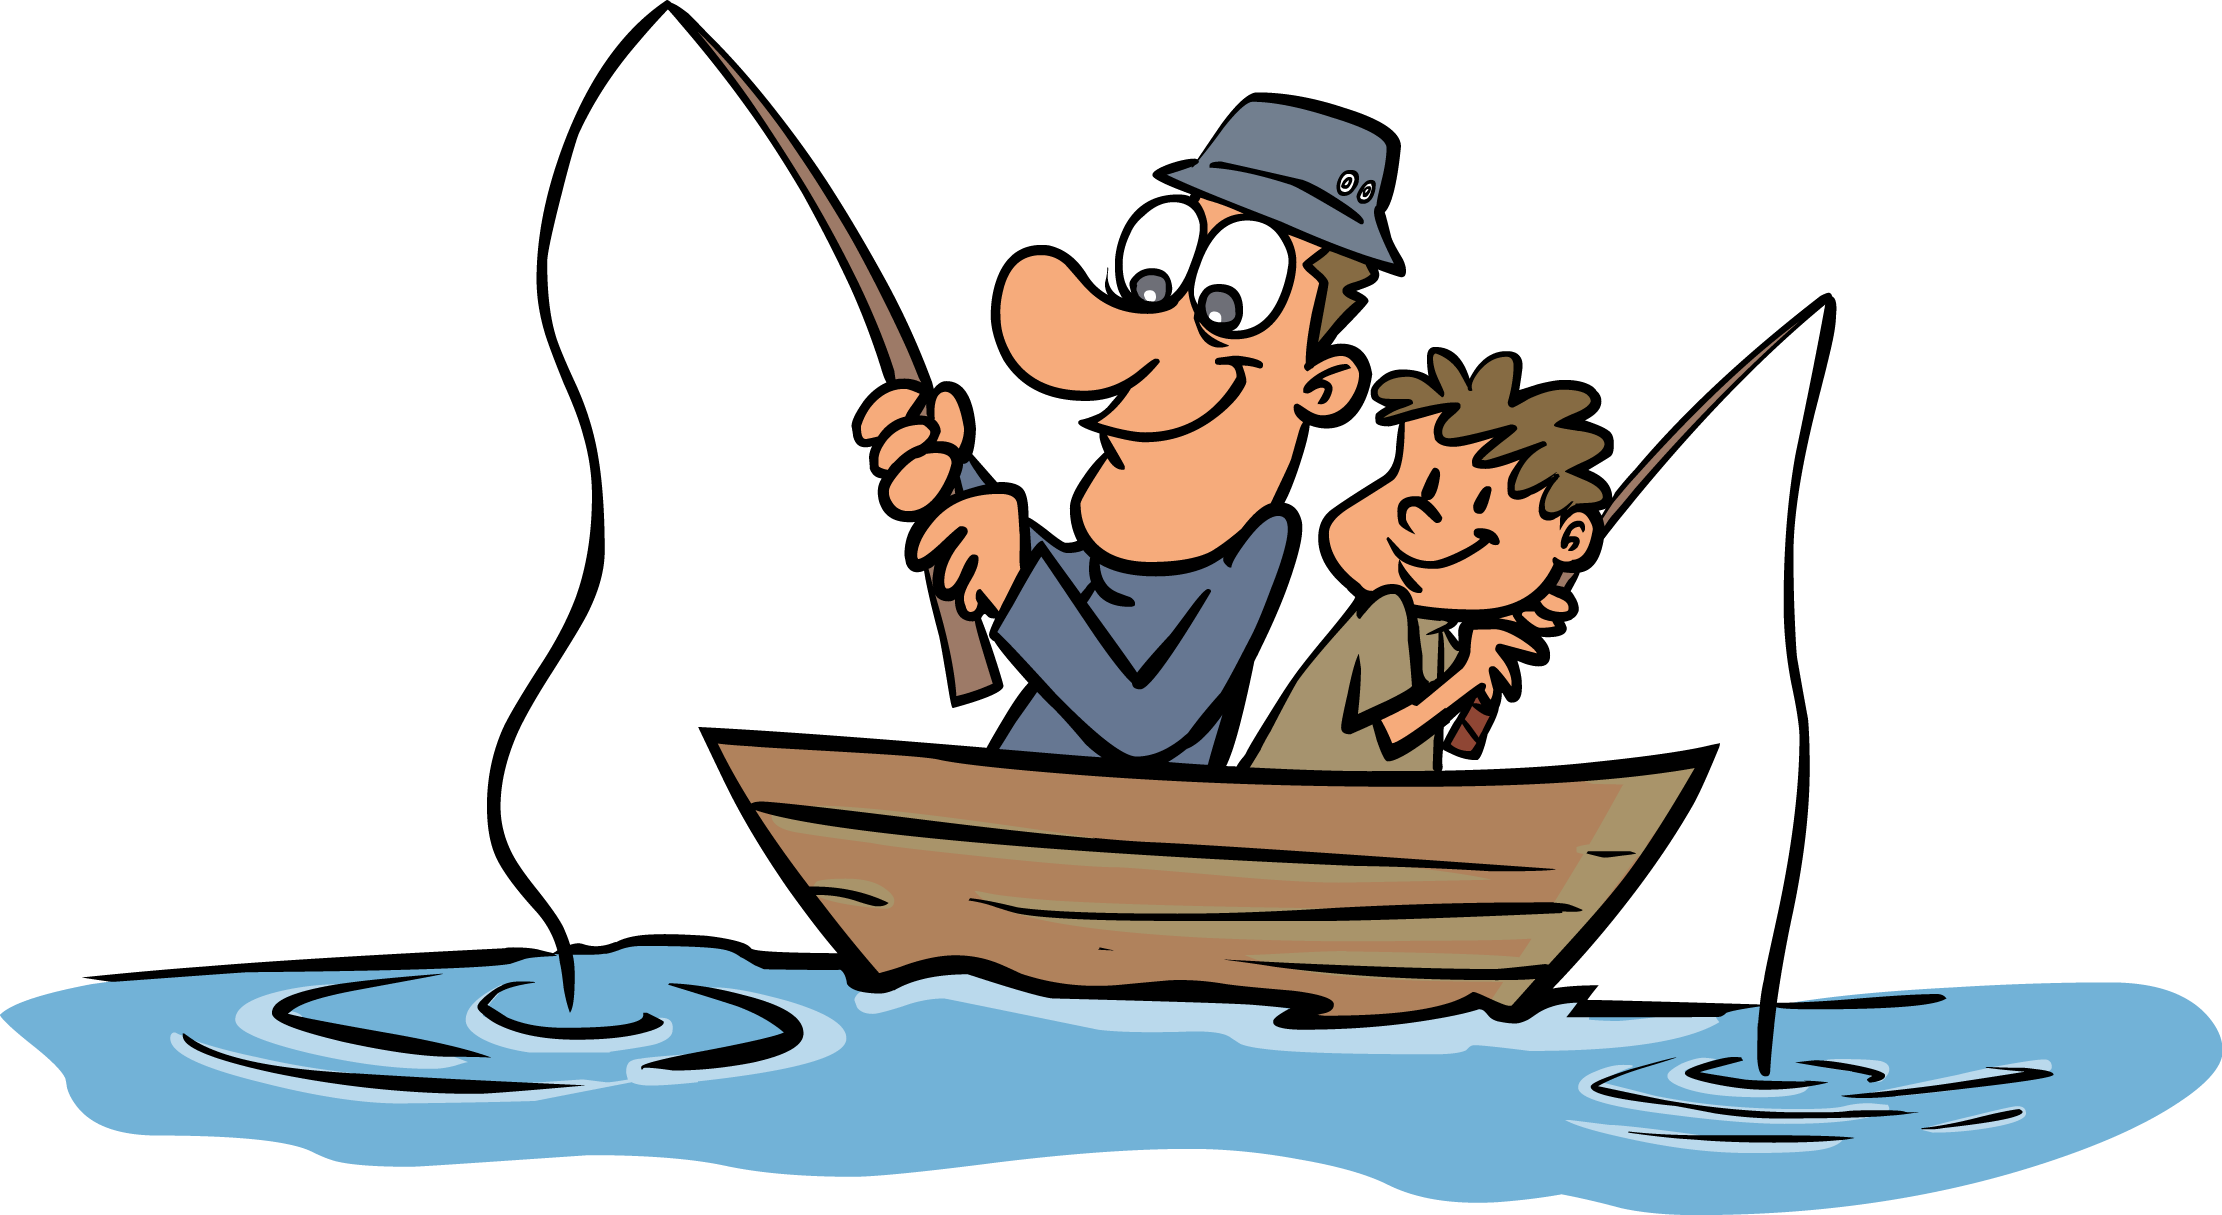 fishing boat clip art illustrations - photo #43